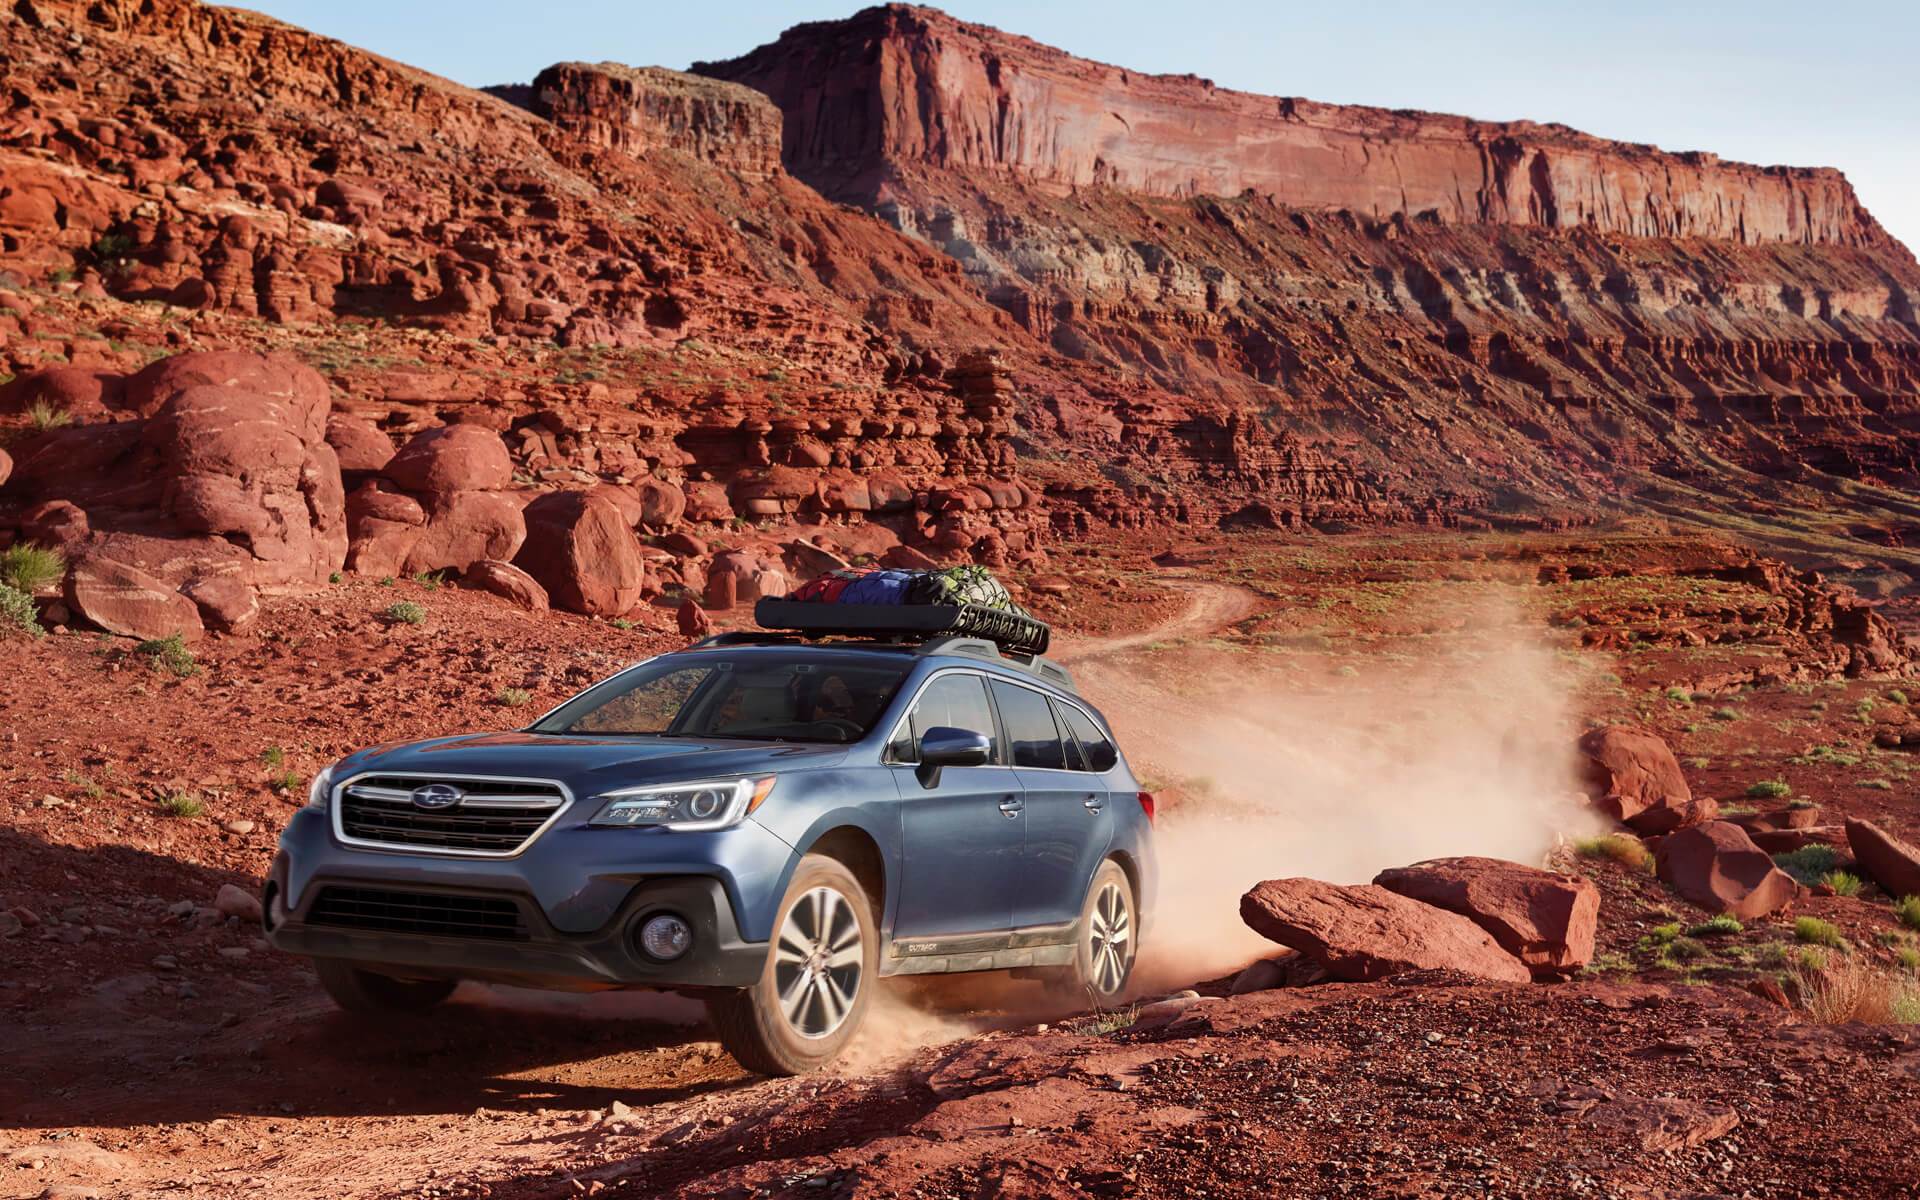 2017 Subaru outback on desert road